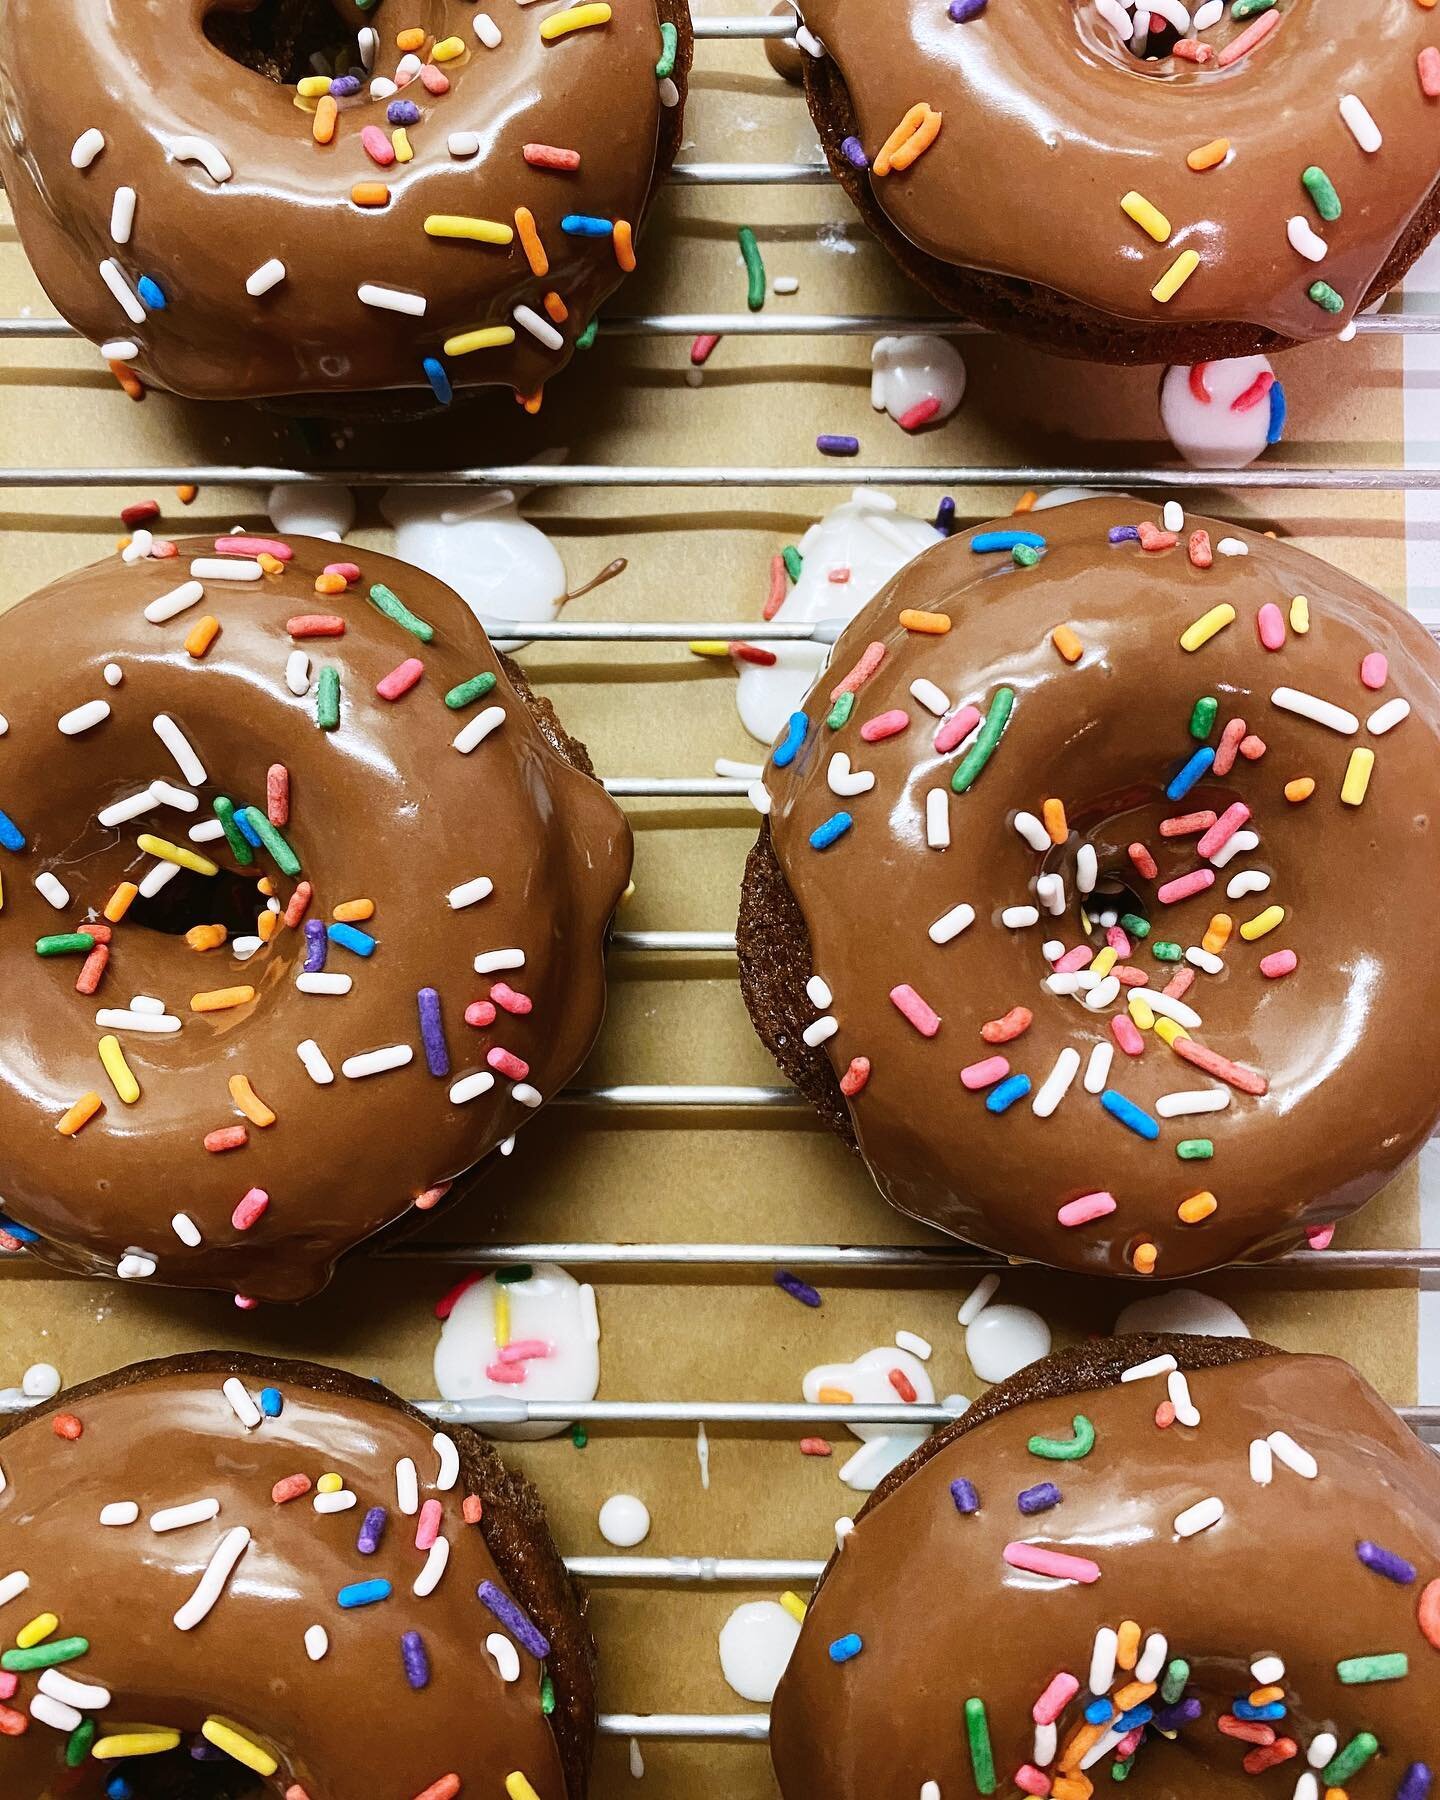 🍩 classic chocolate emoji donut. #chalktoflour #getbakednotfried